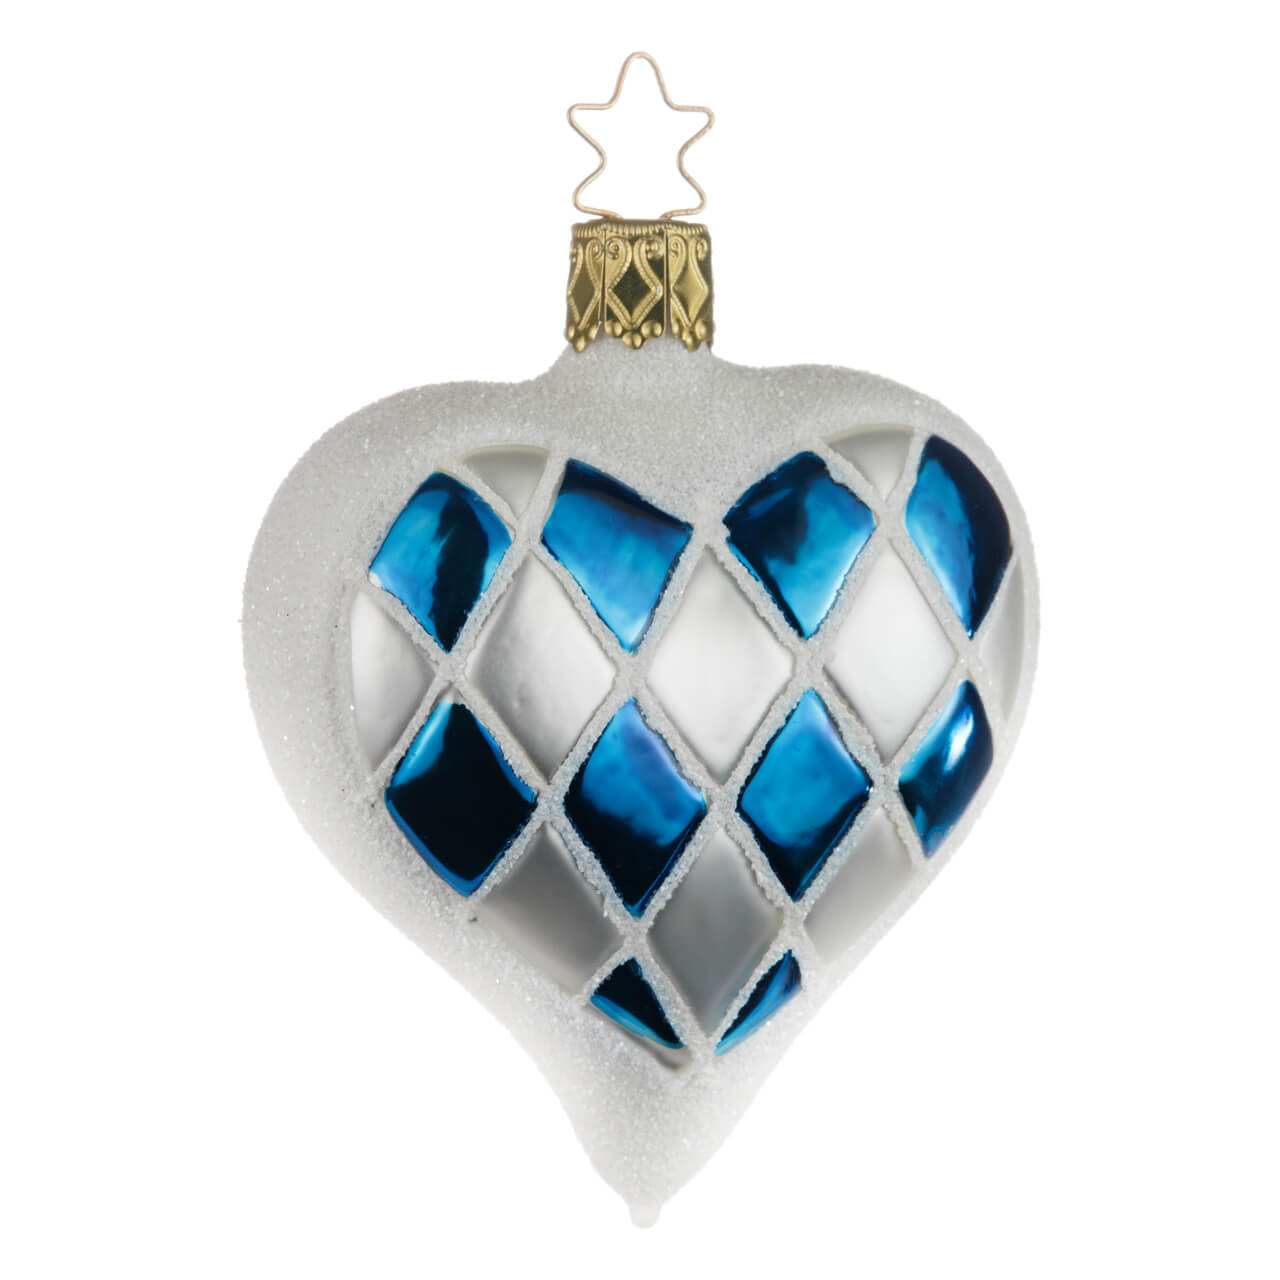 Bavarian heart